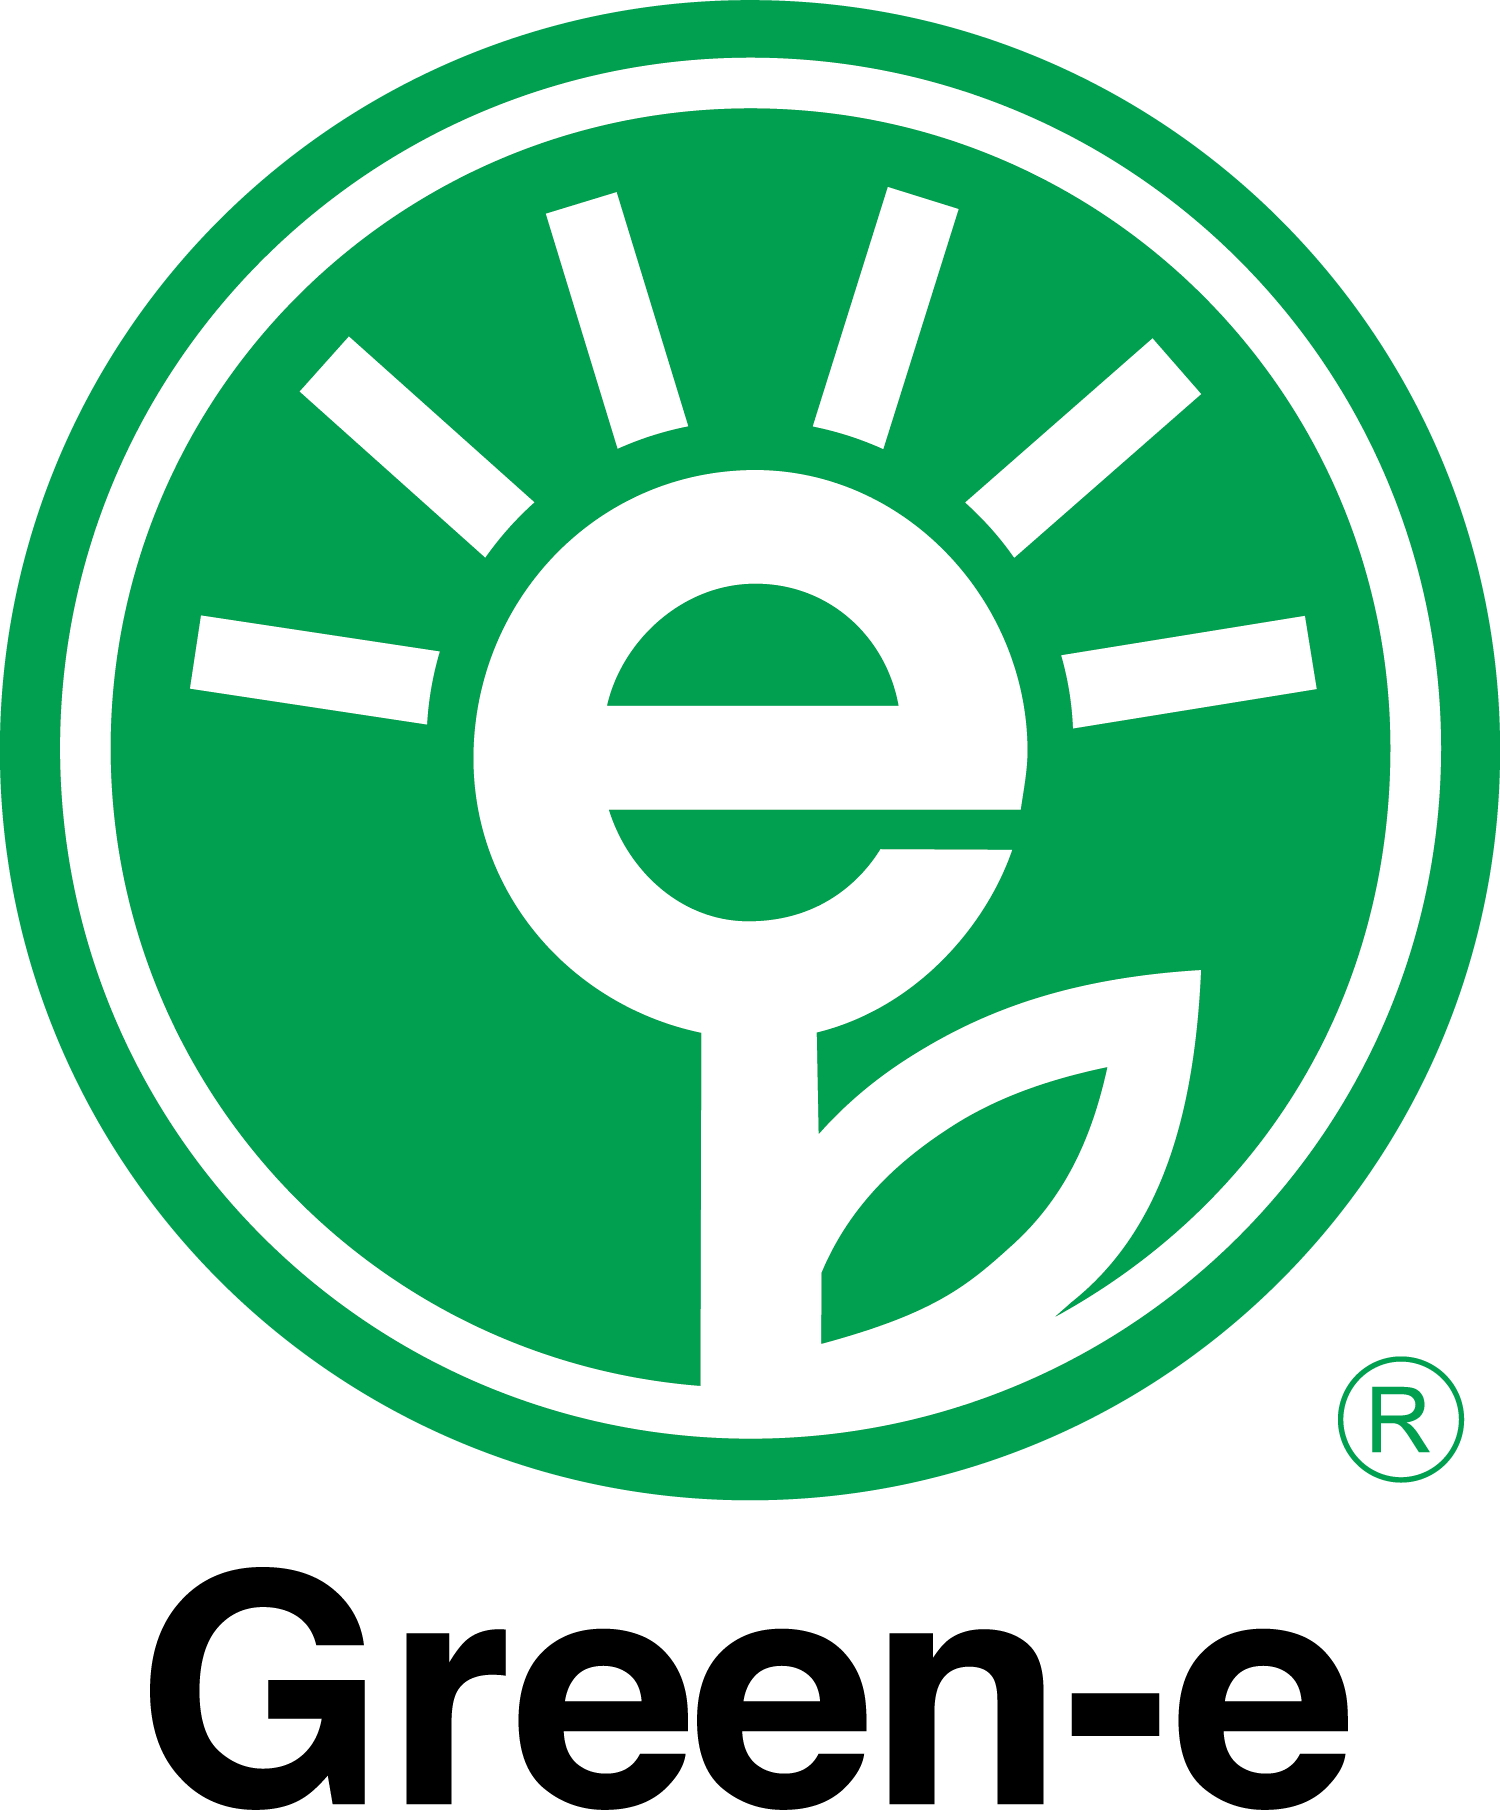 Certified Renewable Energy Logo.png